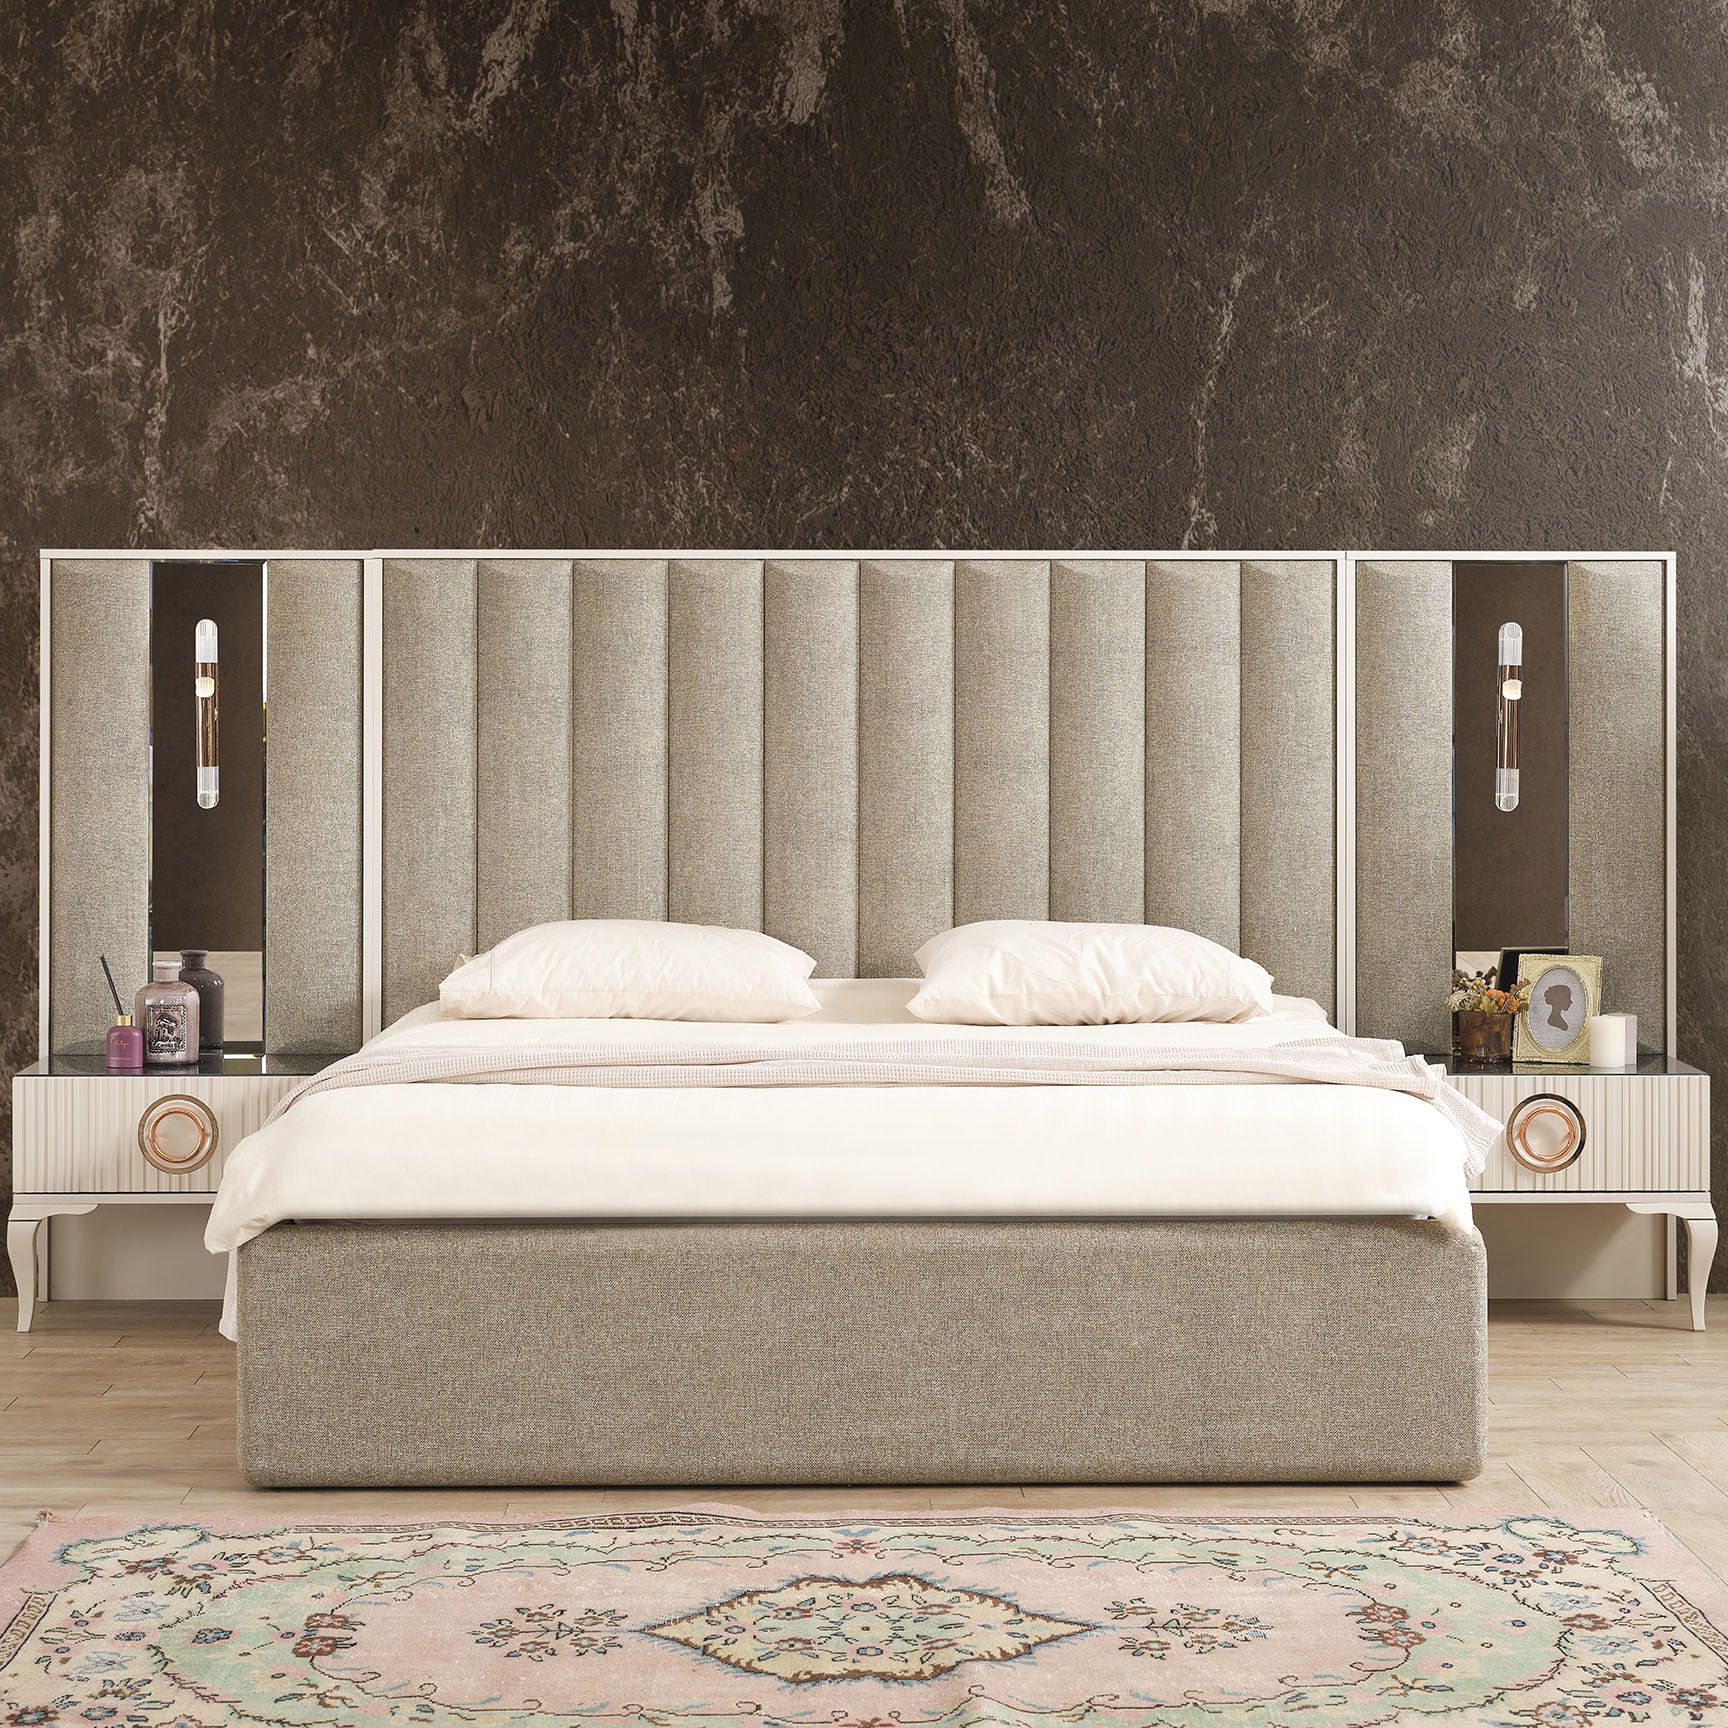 Style Larissa Vol1 Bed With Storage 180x200 cm